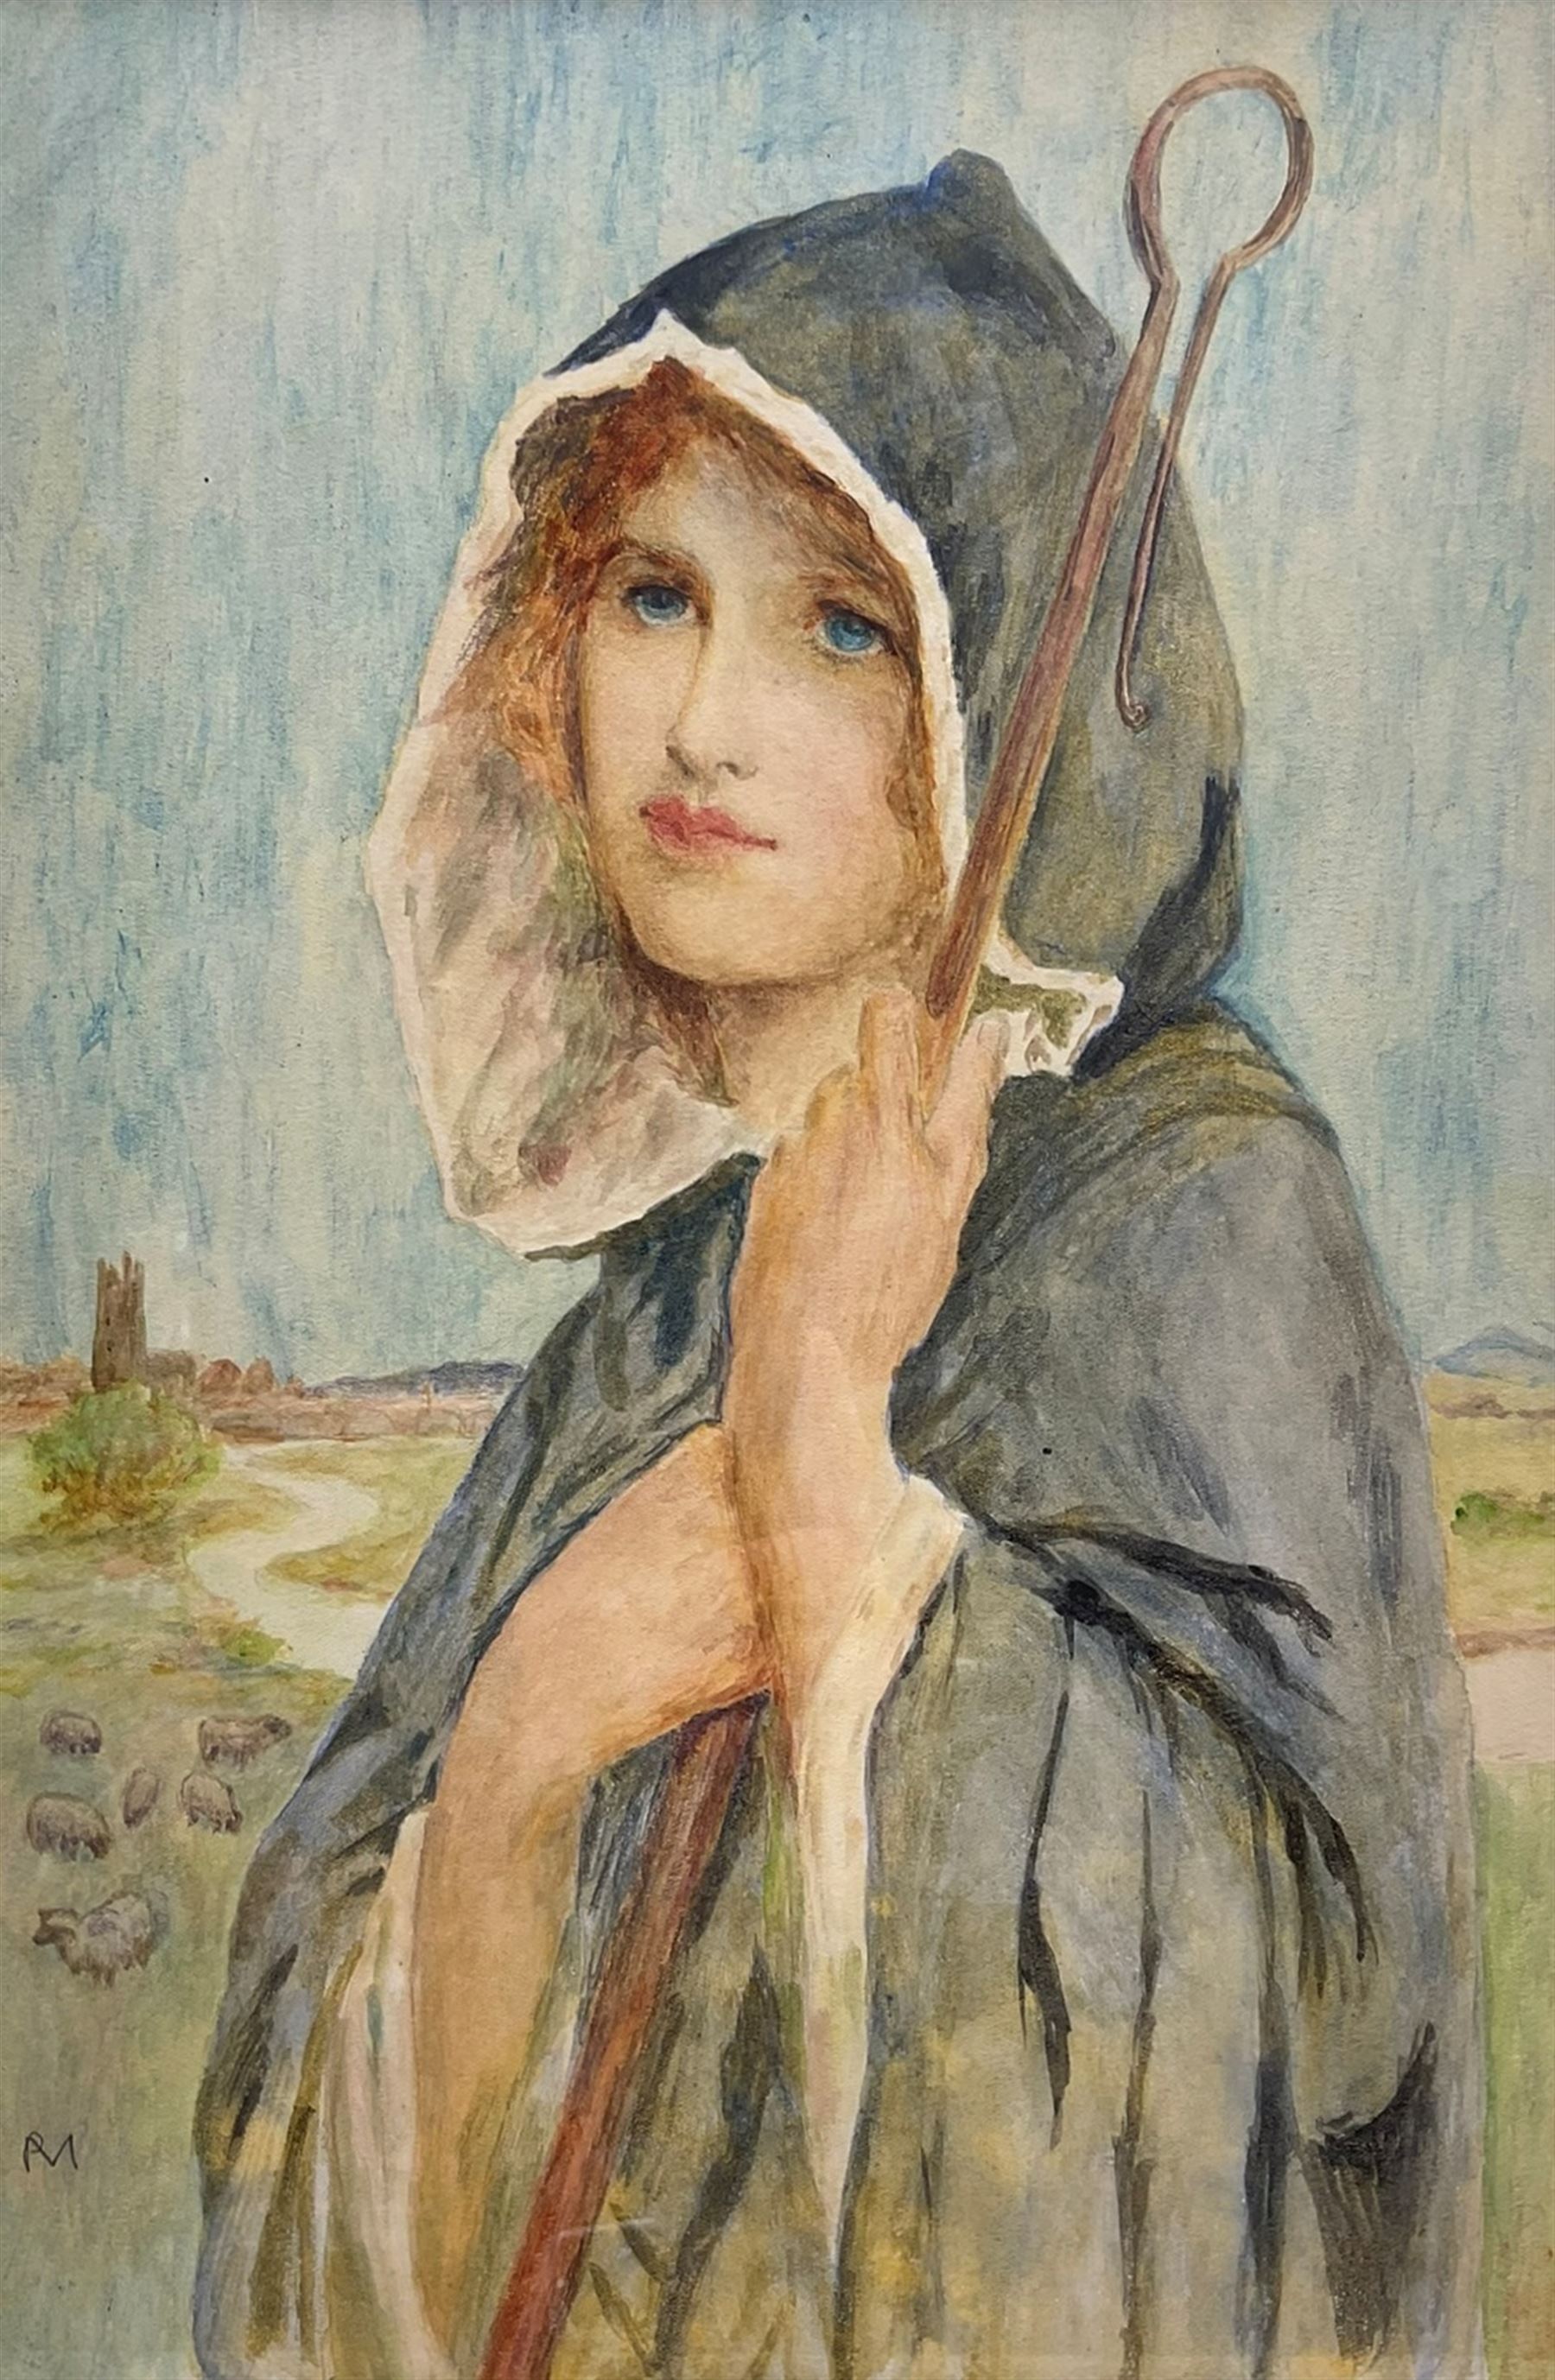 Philip Richard Morris ARA (British 1838-1902): The Young Shepherdess